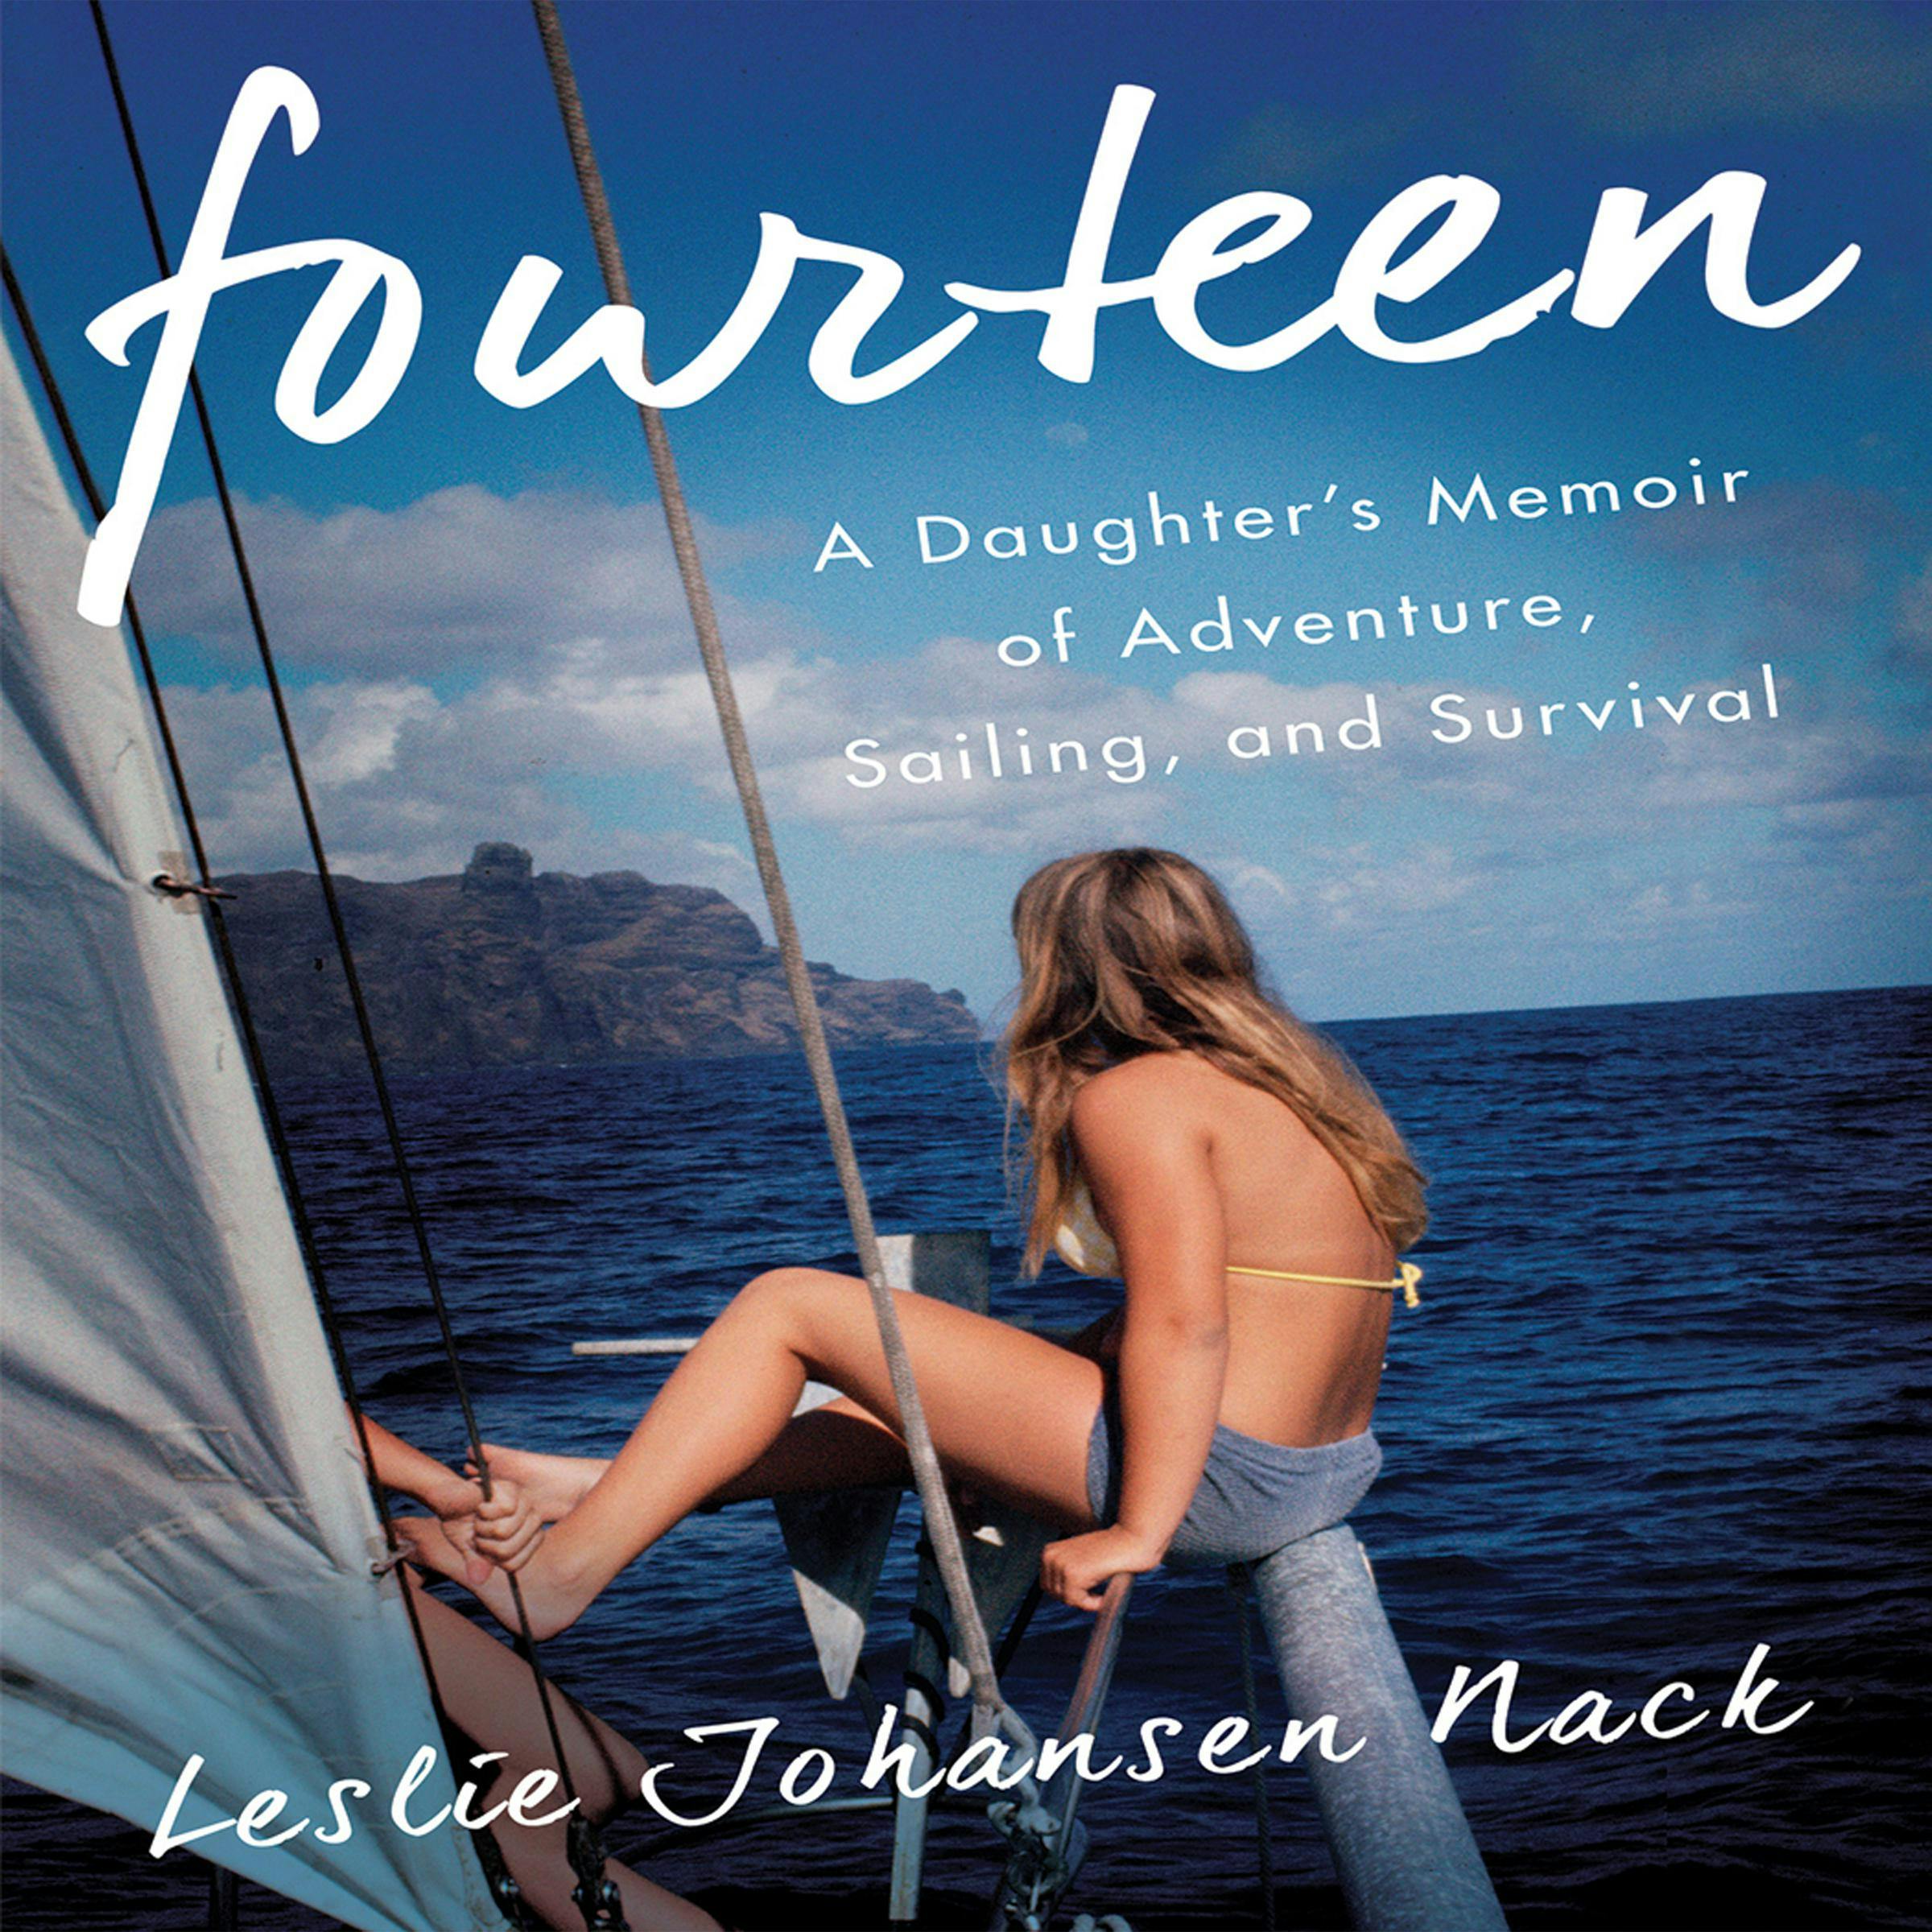 Fourteen: A Daughter's Memoir of Adventure, Sailing, and Survival - Leslie Johansen Nack